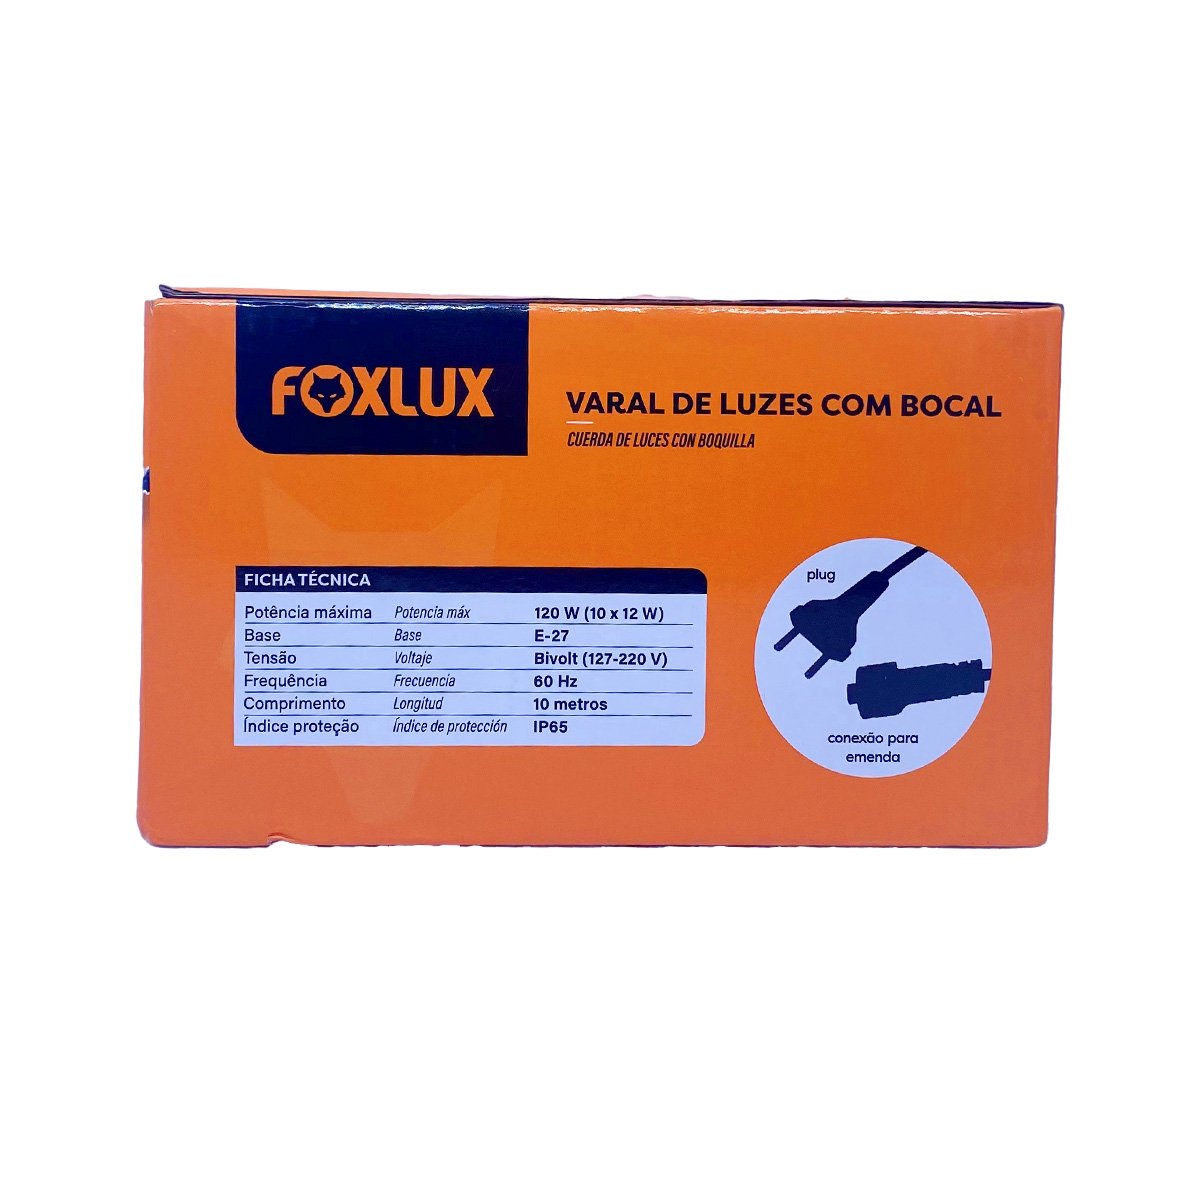 Varal de Luzes 10 M Bocal E-27 Bivolt sem Lampadas Foxlux - 8